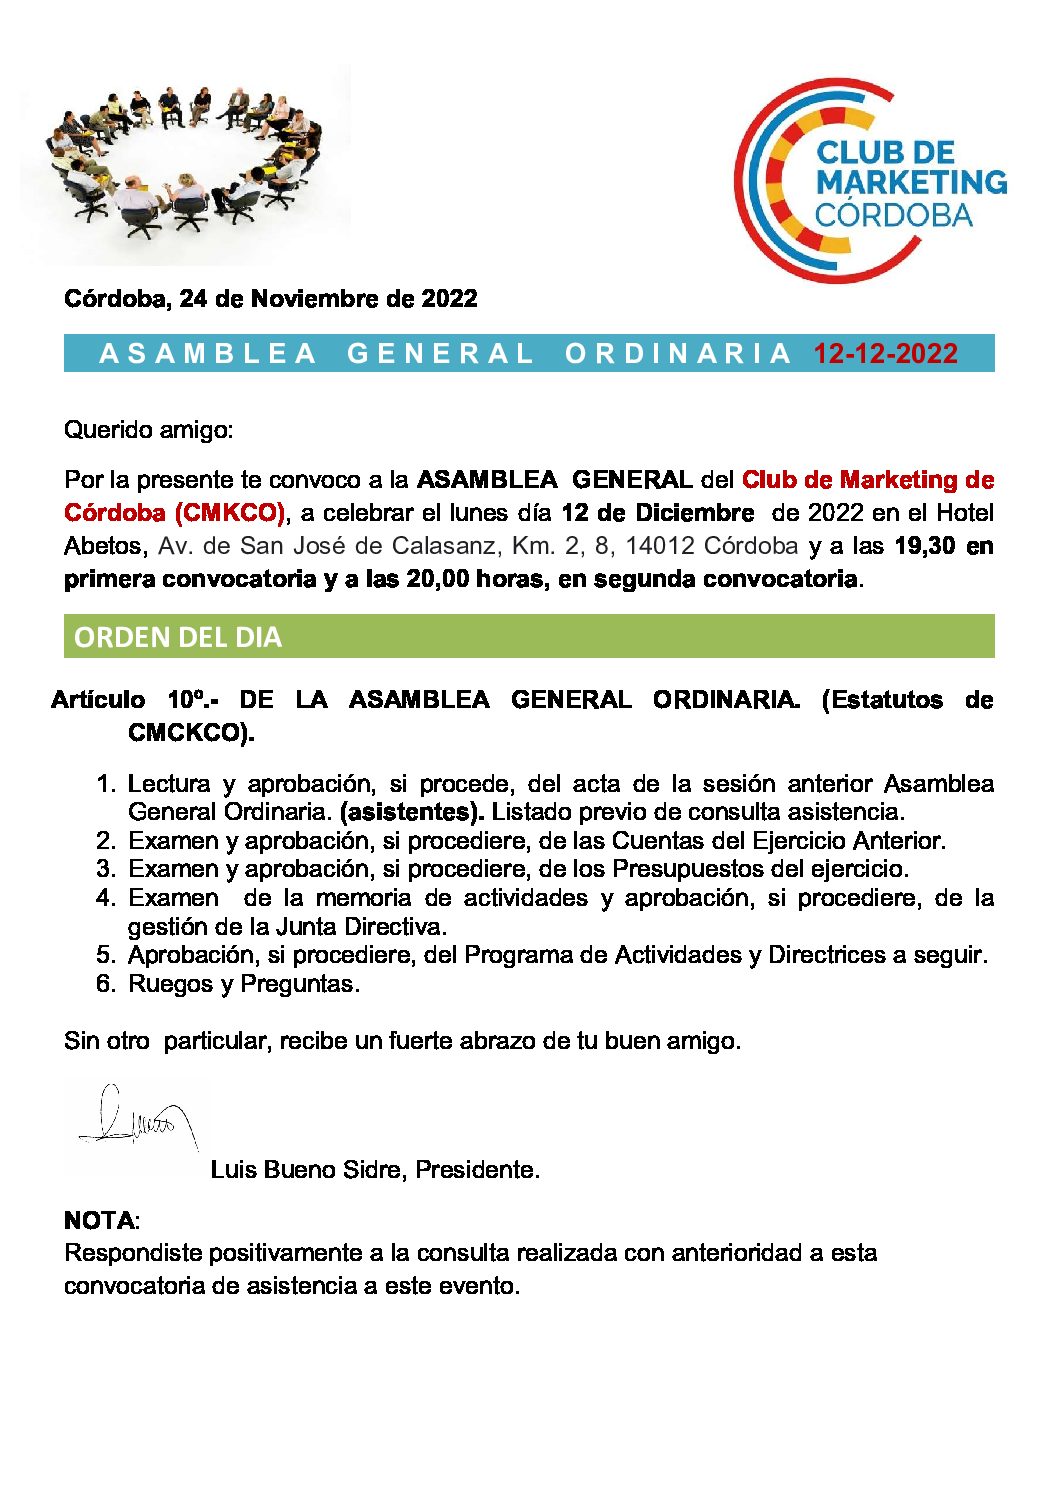 ASAMBLEA GENERAL ORDINARIA 12-12-2022